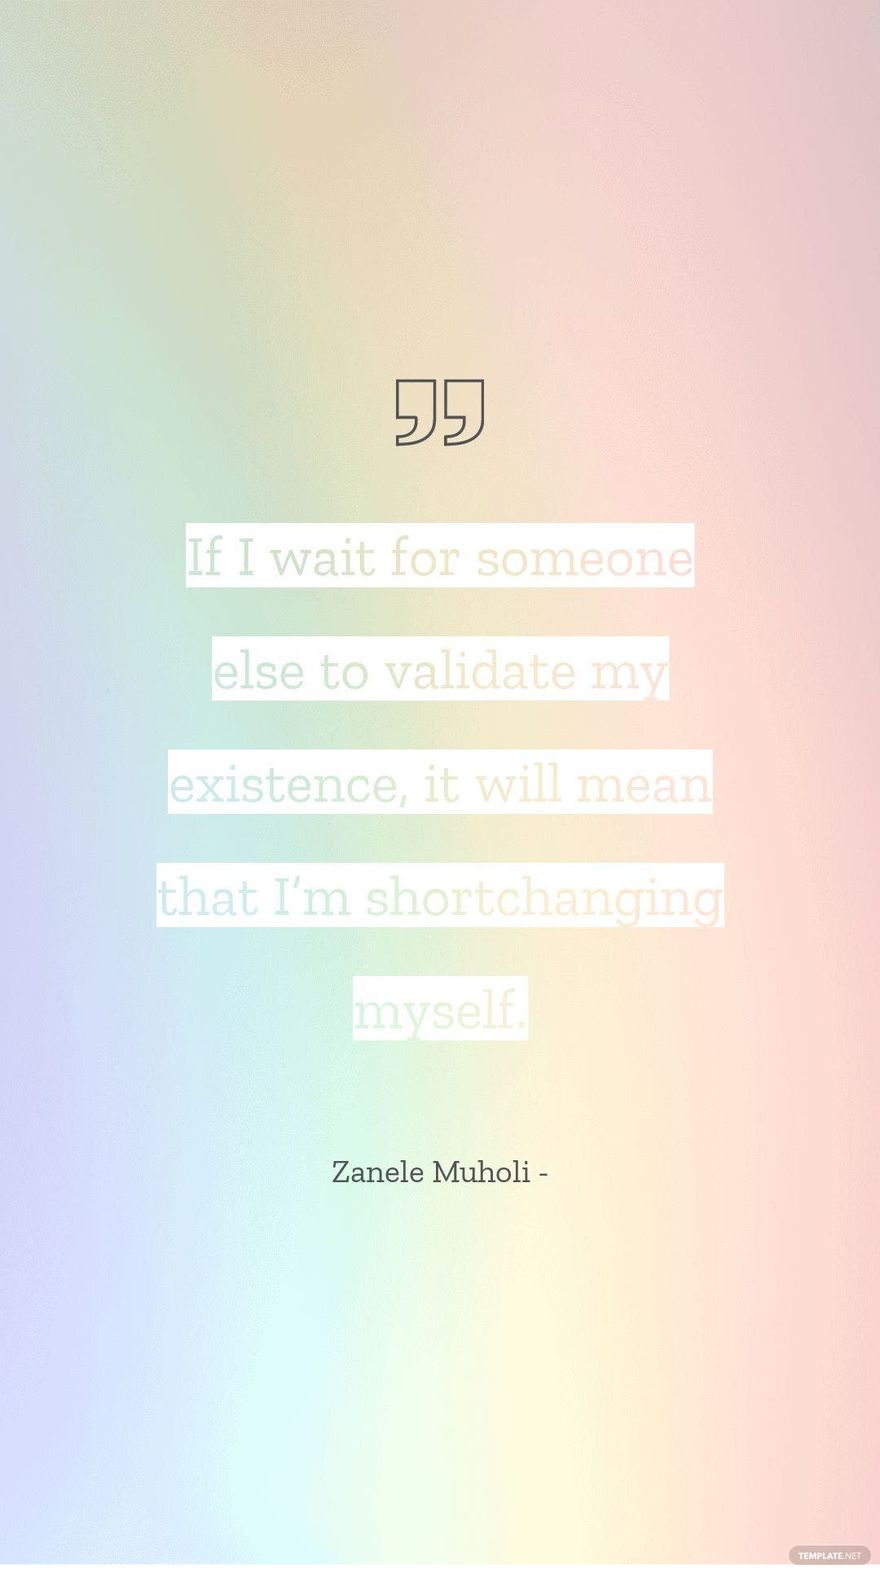 Zanele Muholi - If I wait for someone else to validate my existence, it will mean that I’m shortchanging myself.